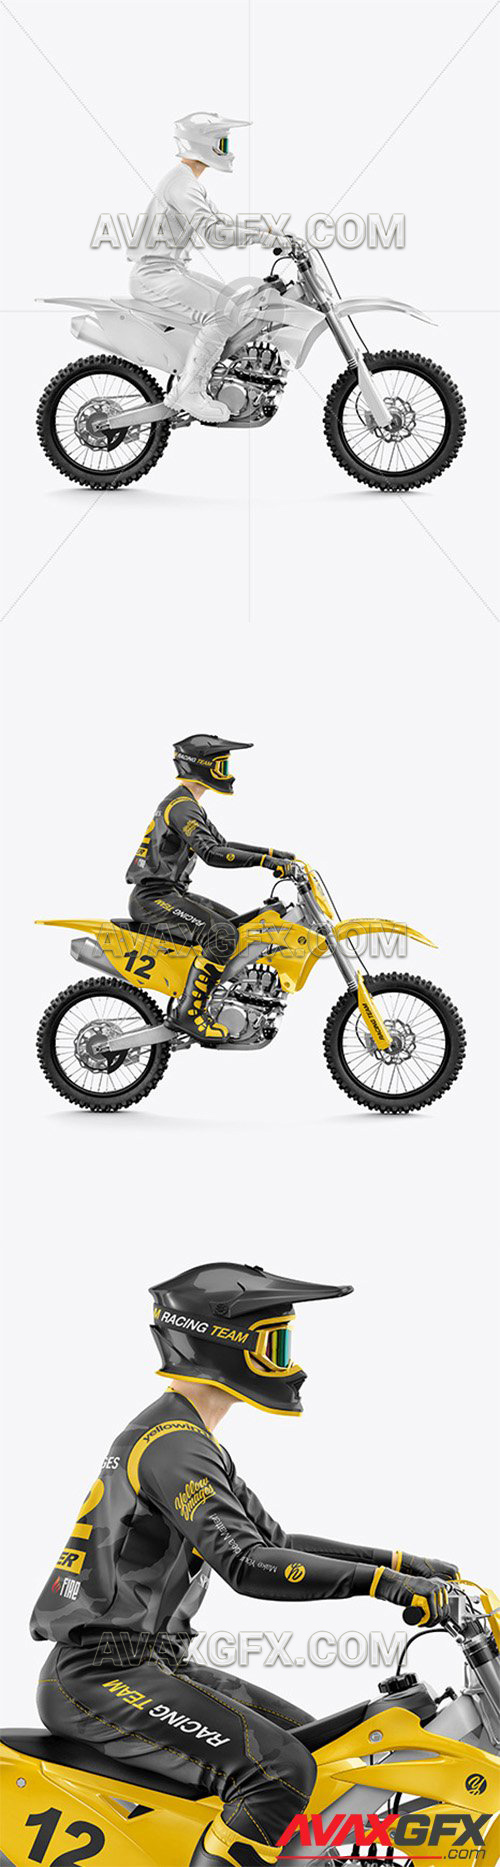 Motocross Racing Kit Mockup 58035